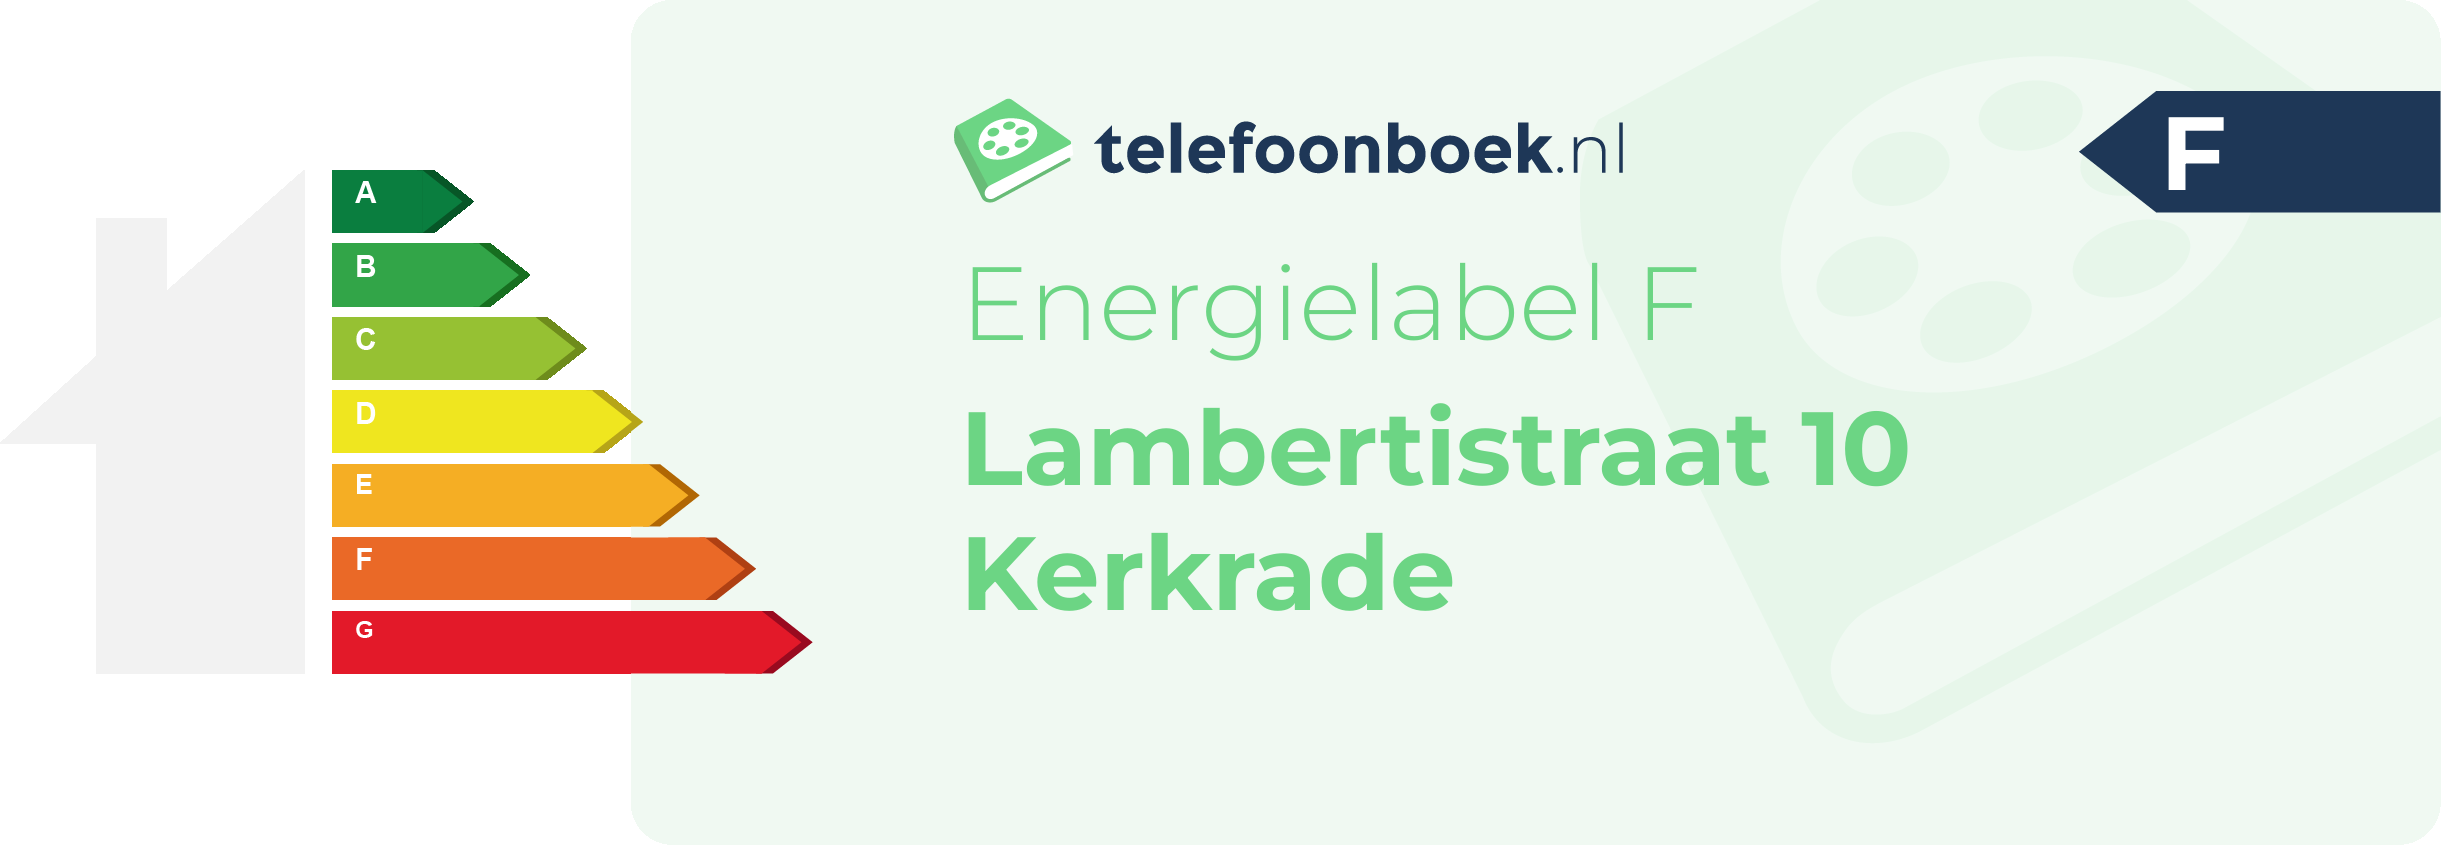 Energielabel Lambertistraat 10 Kerkrade